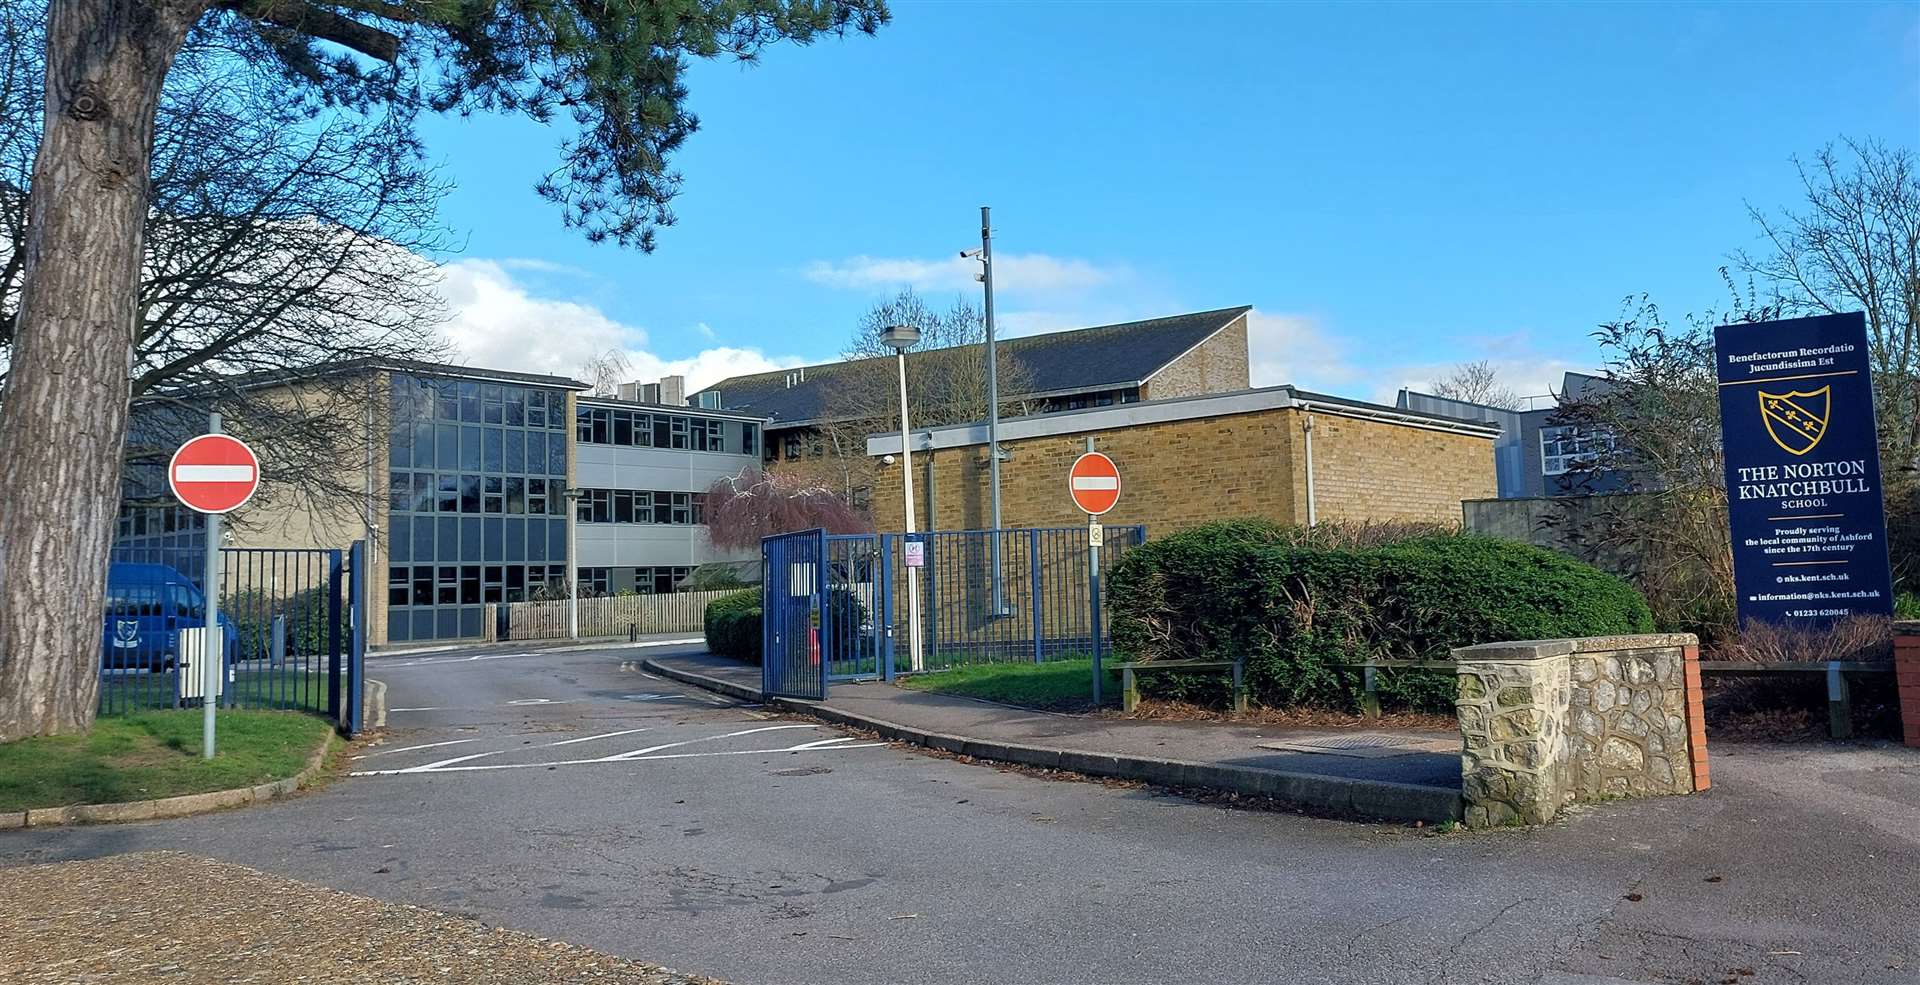 More than 1,200 pupils go to Norton Knatchbull School in Hythe Road, Ashford